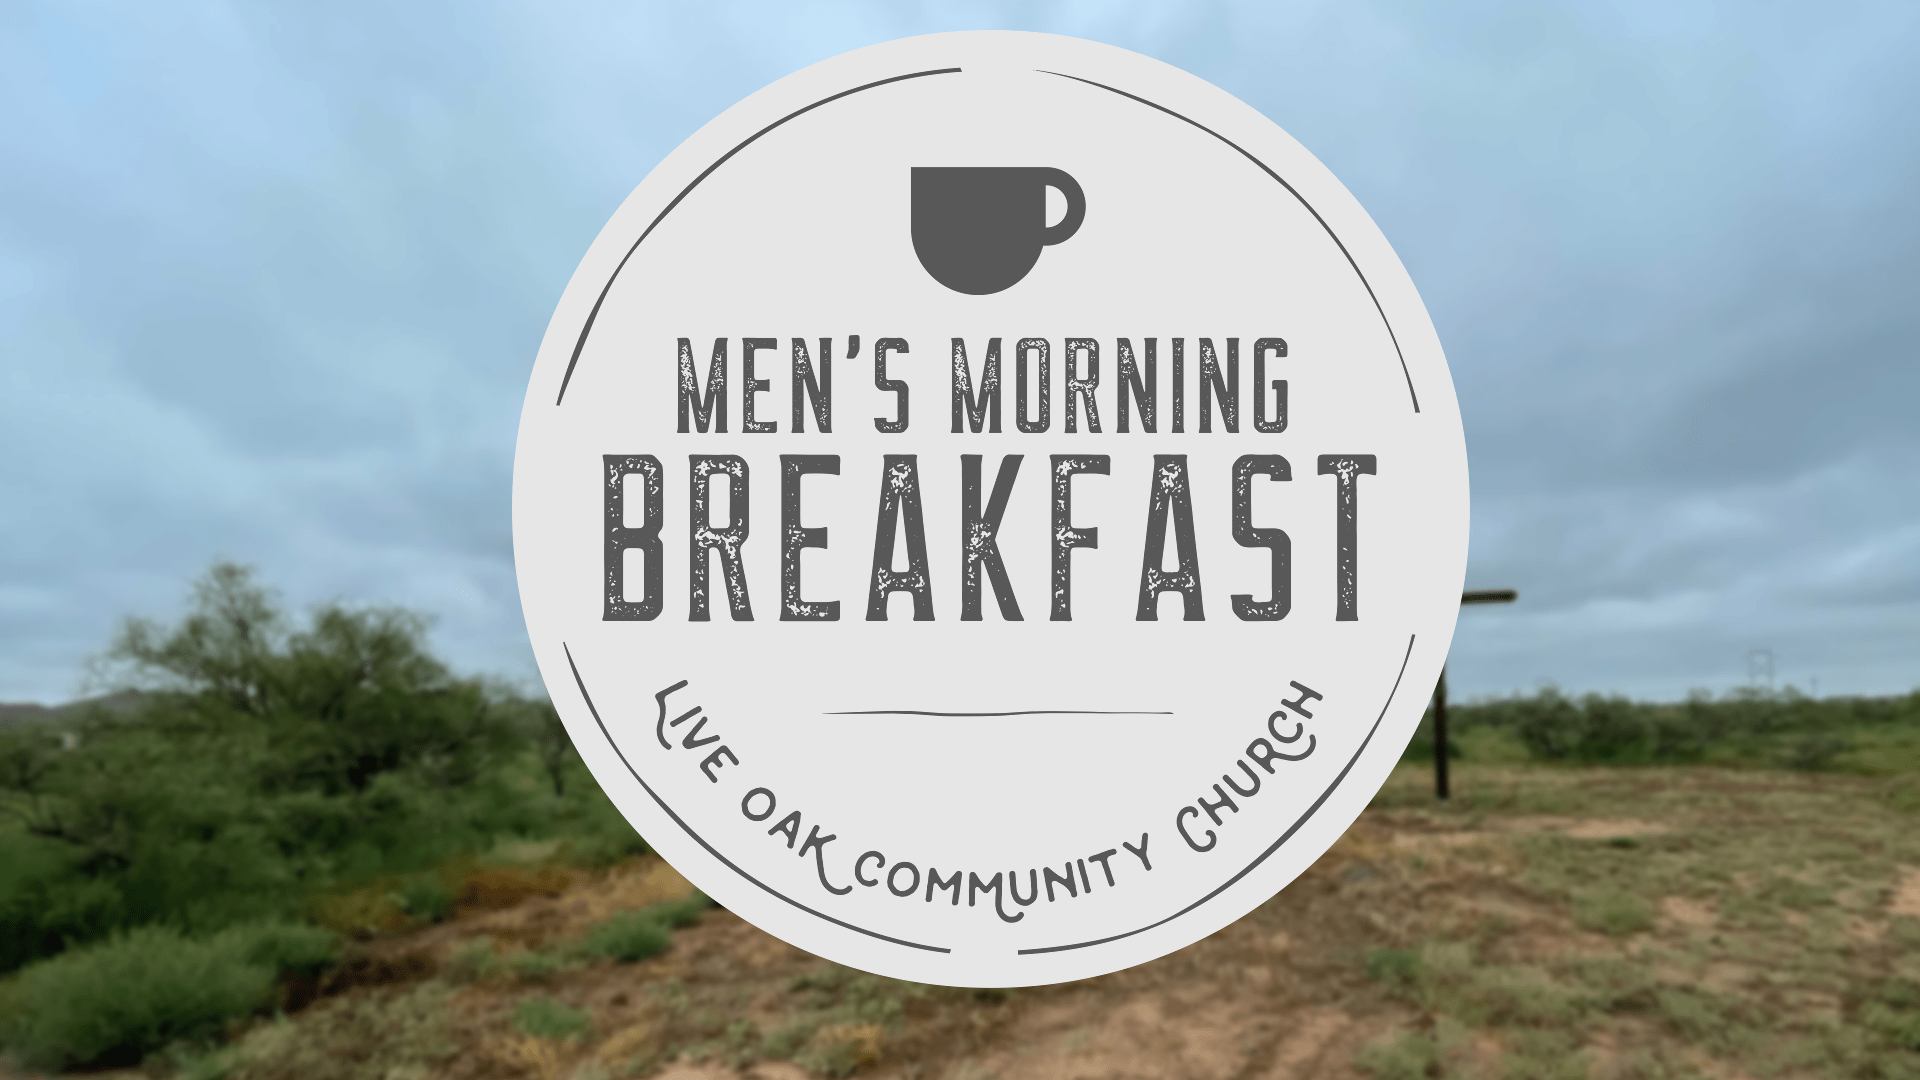 Men’s Morning Breakfast